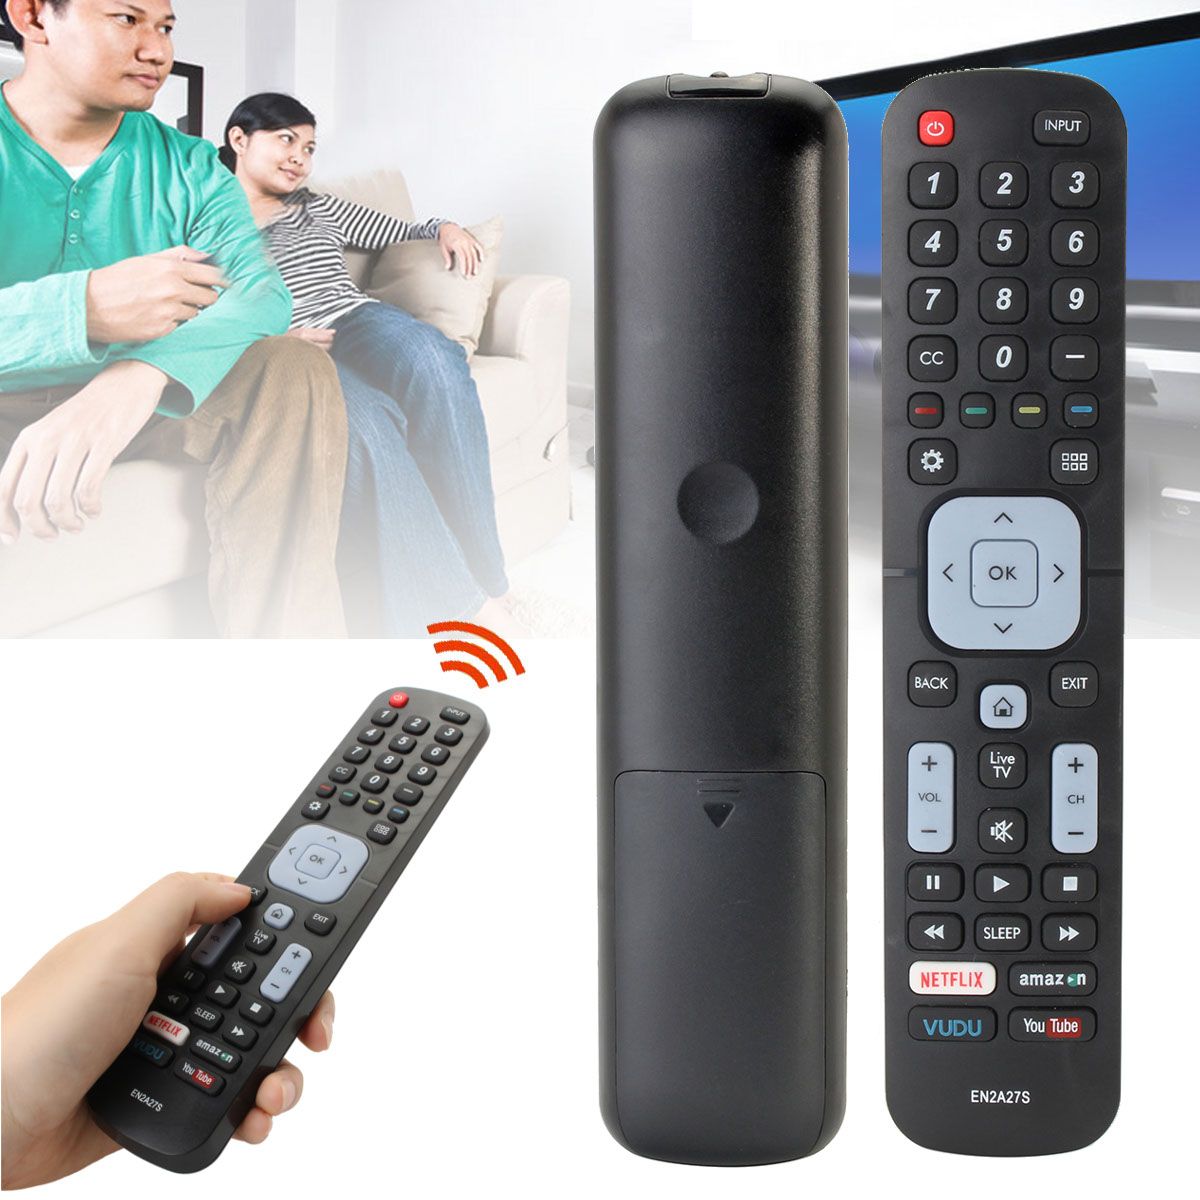 Replacement-Smart-TV-Remote-Control-For-Sharp-EN2A27S-LC-65N9000U-LC-75N620U-LC-75N800U-1366180